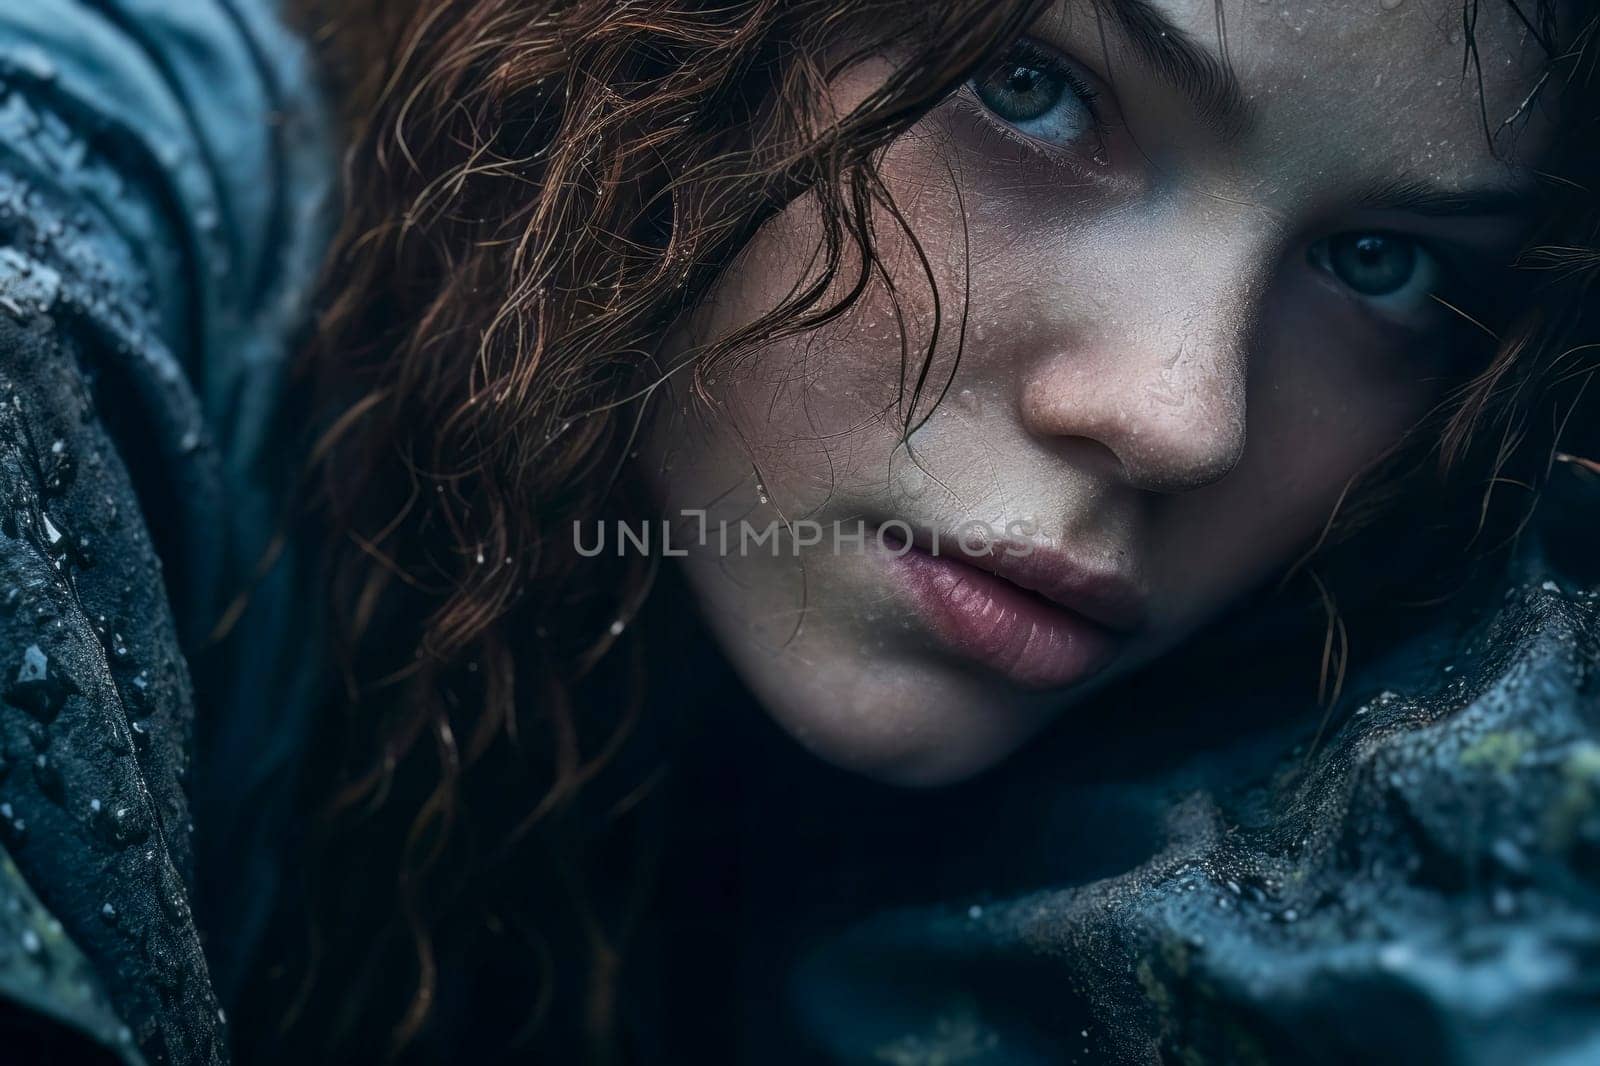 Captivating Close-Up Portrait of a Sad Girl with Intense Gaze: Symbol of Burnout by pippocarlot